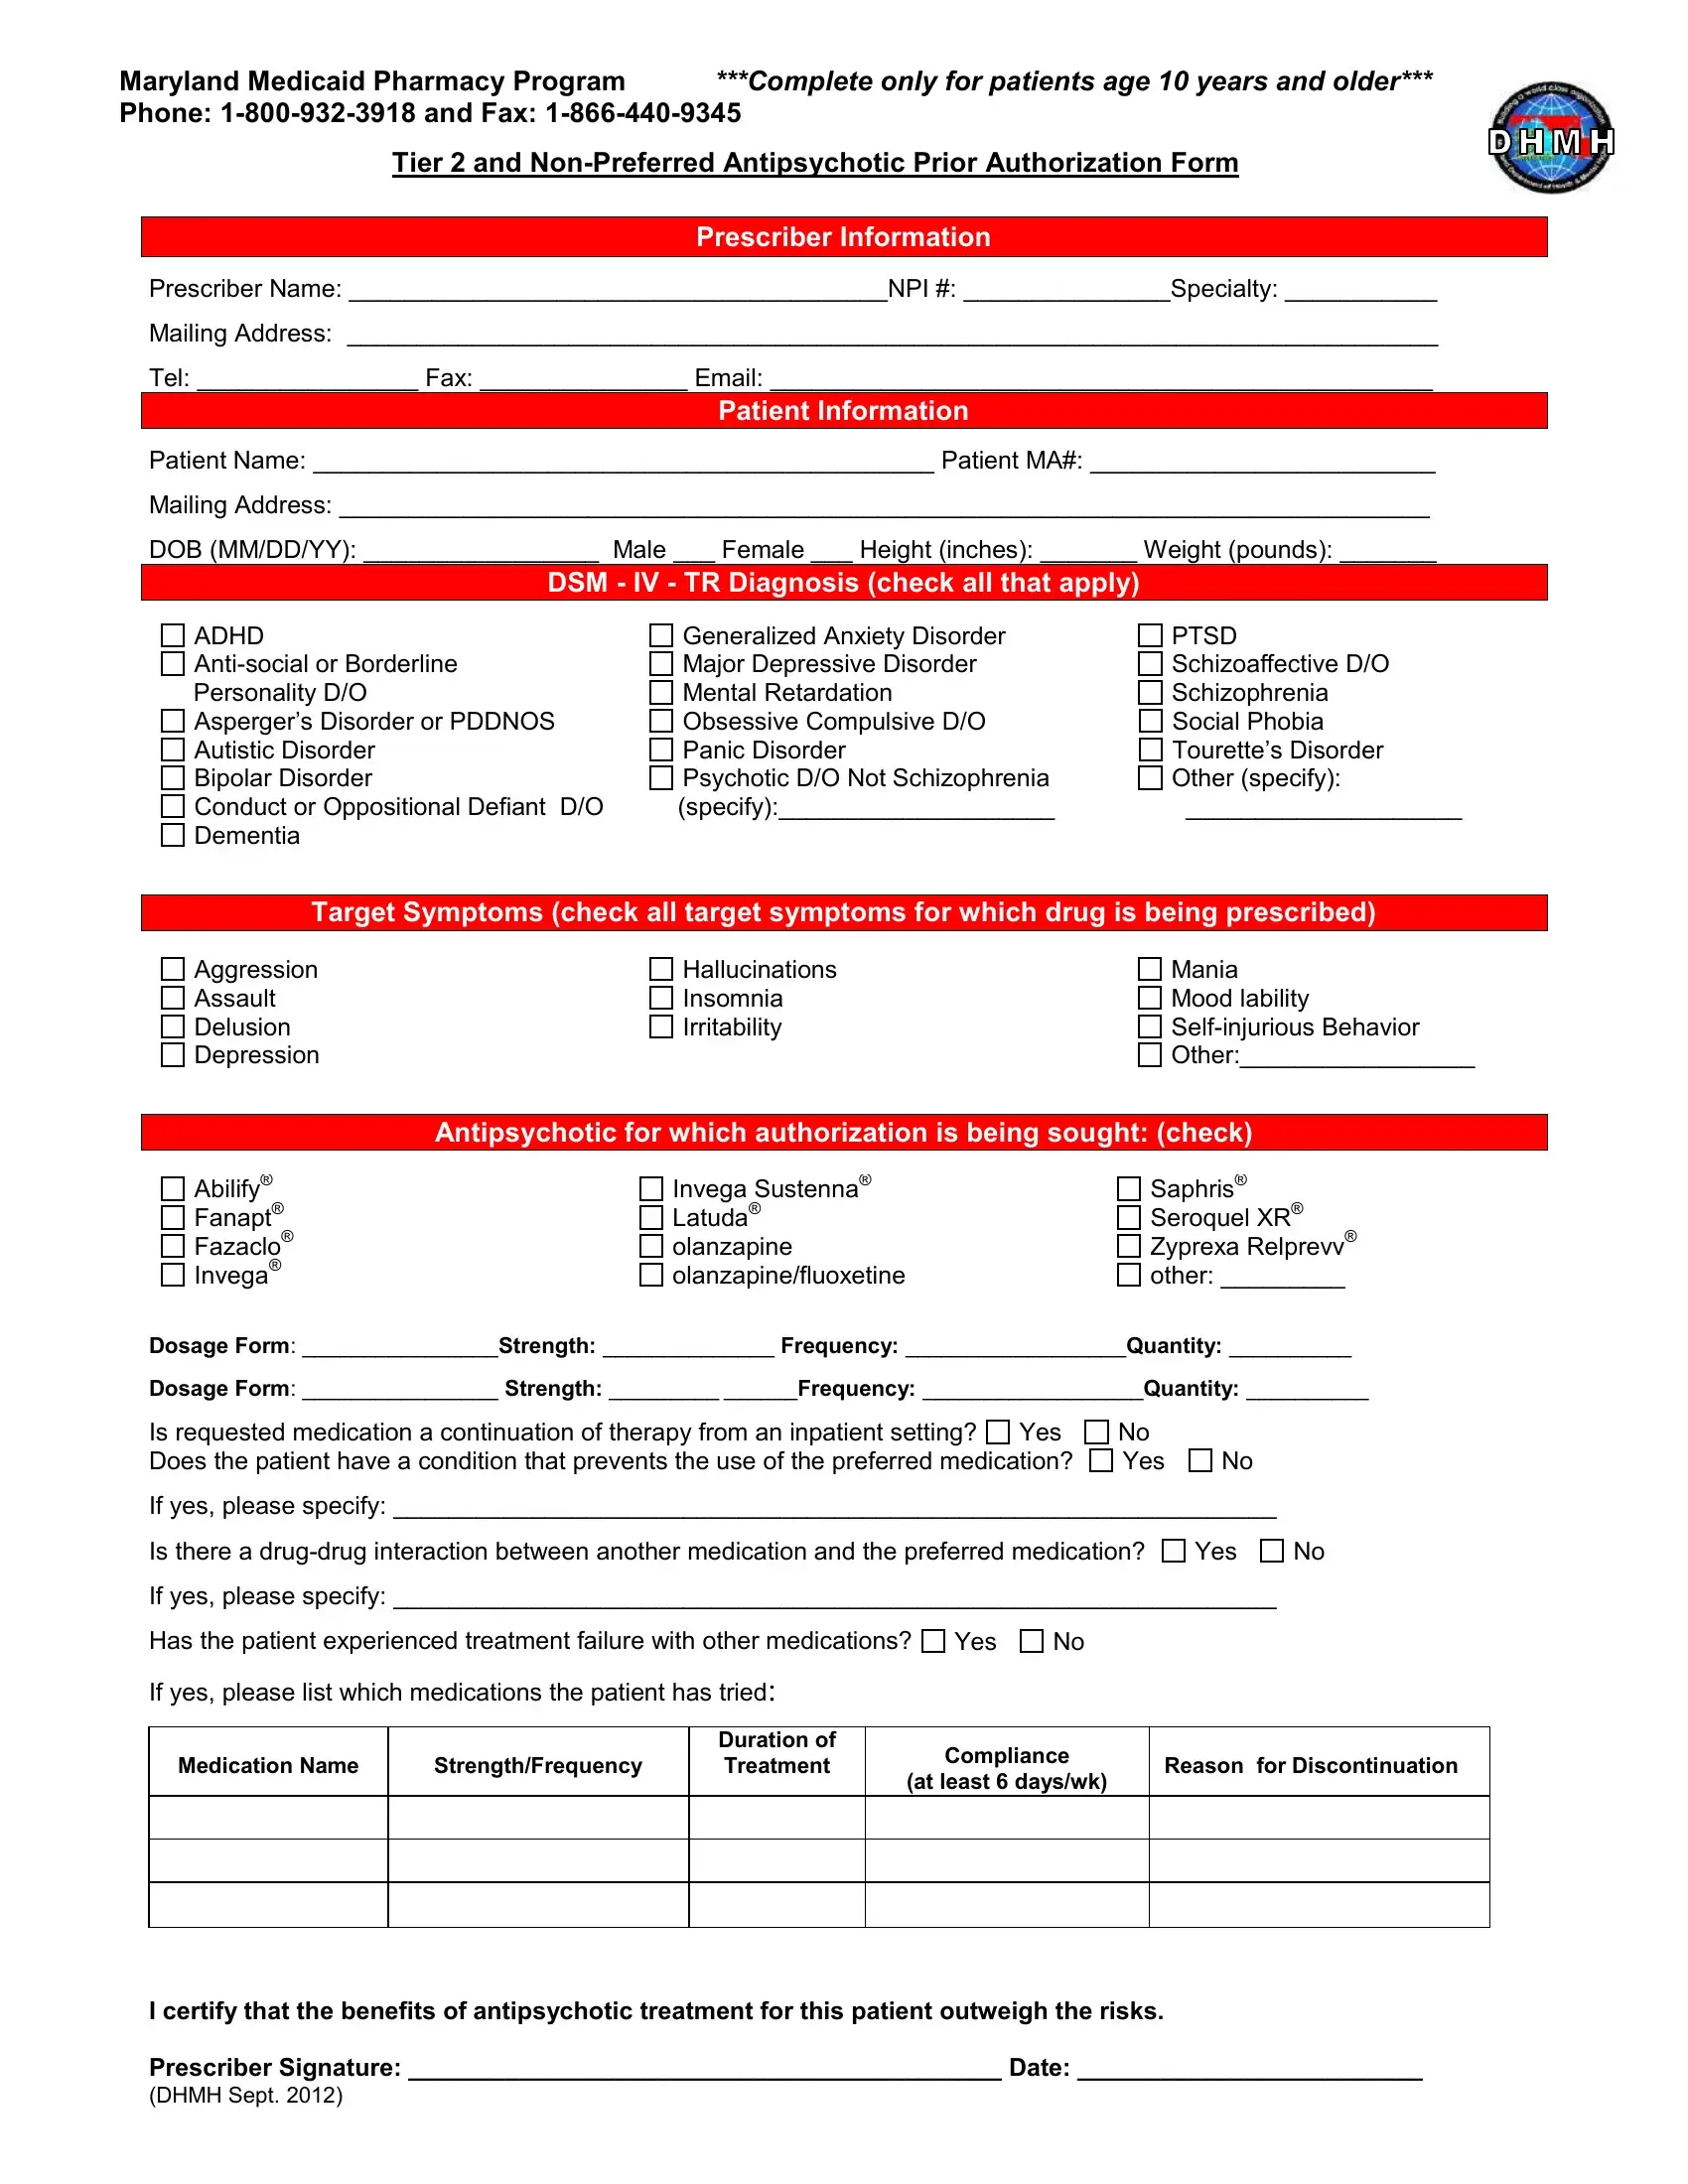 Antipsychotic Prior Authorization Form Preview